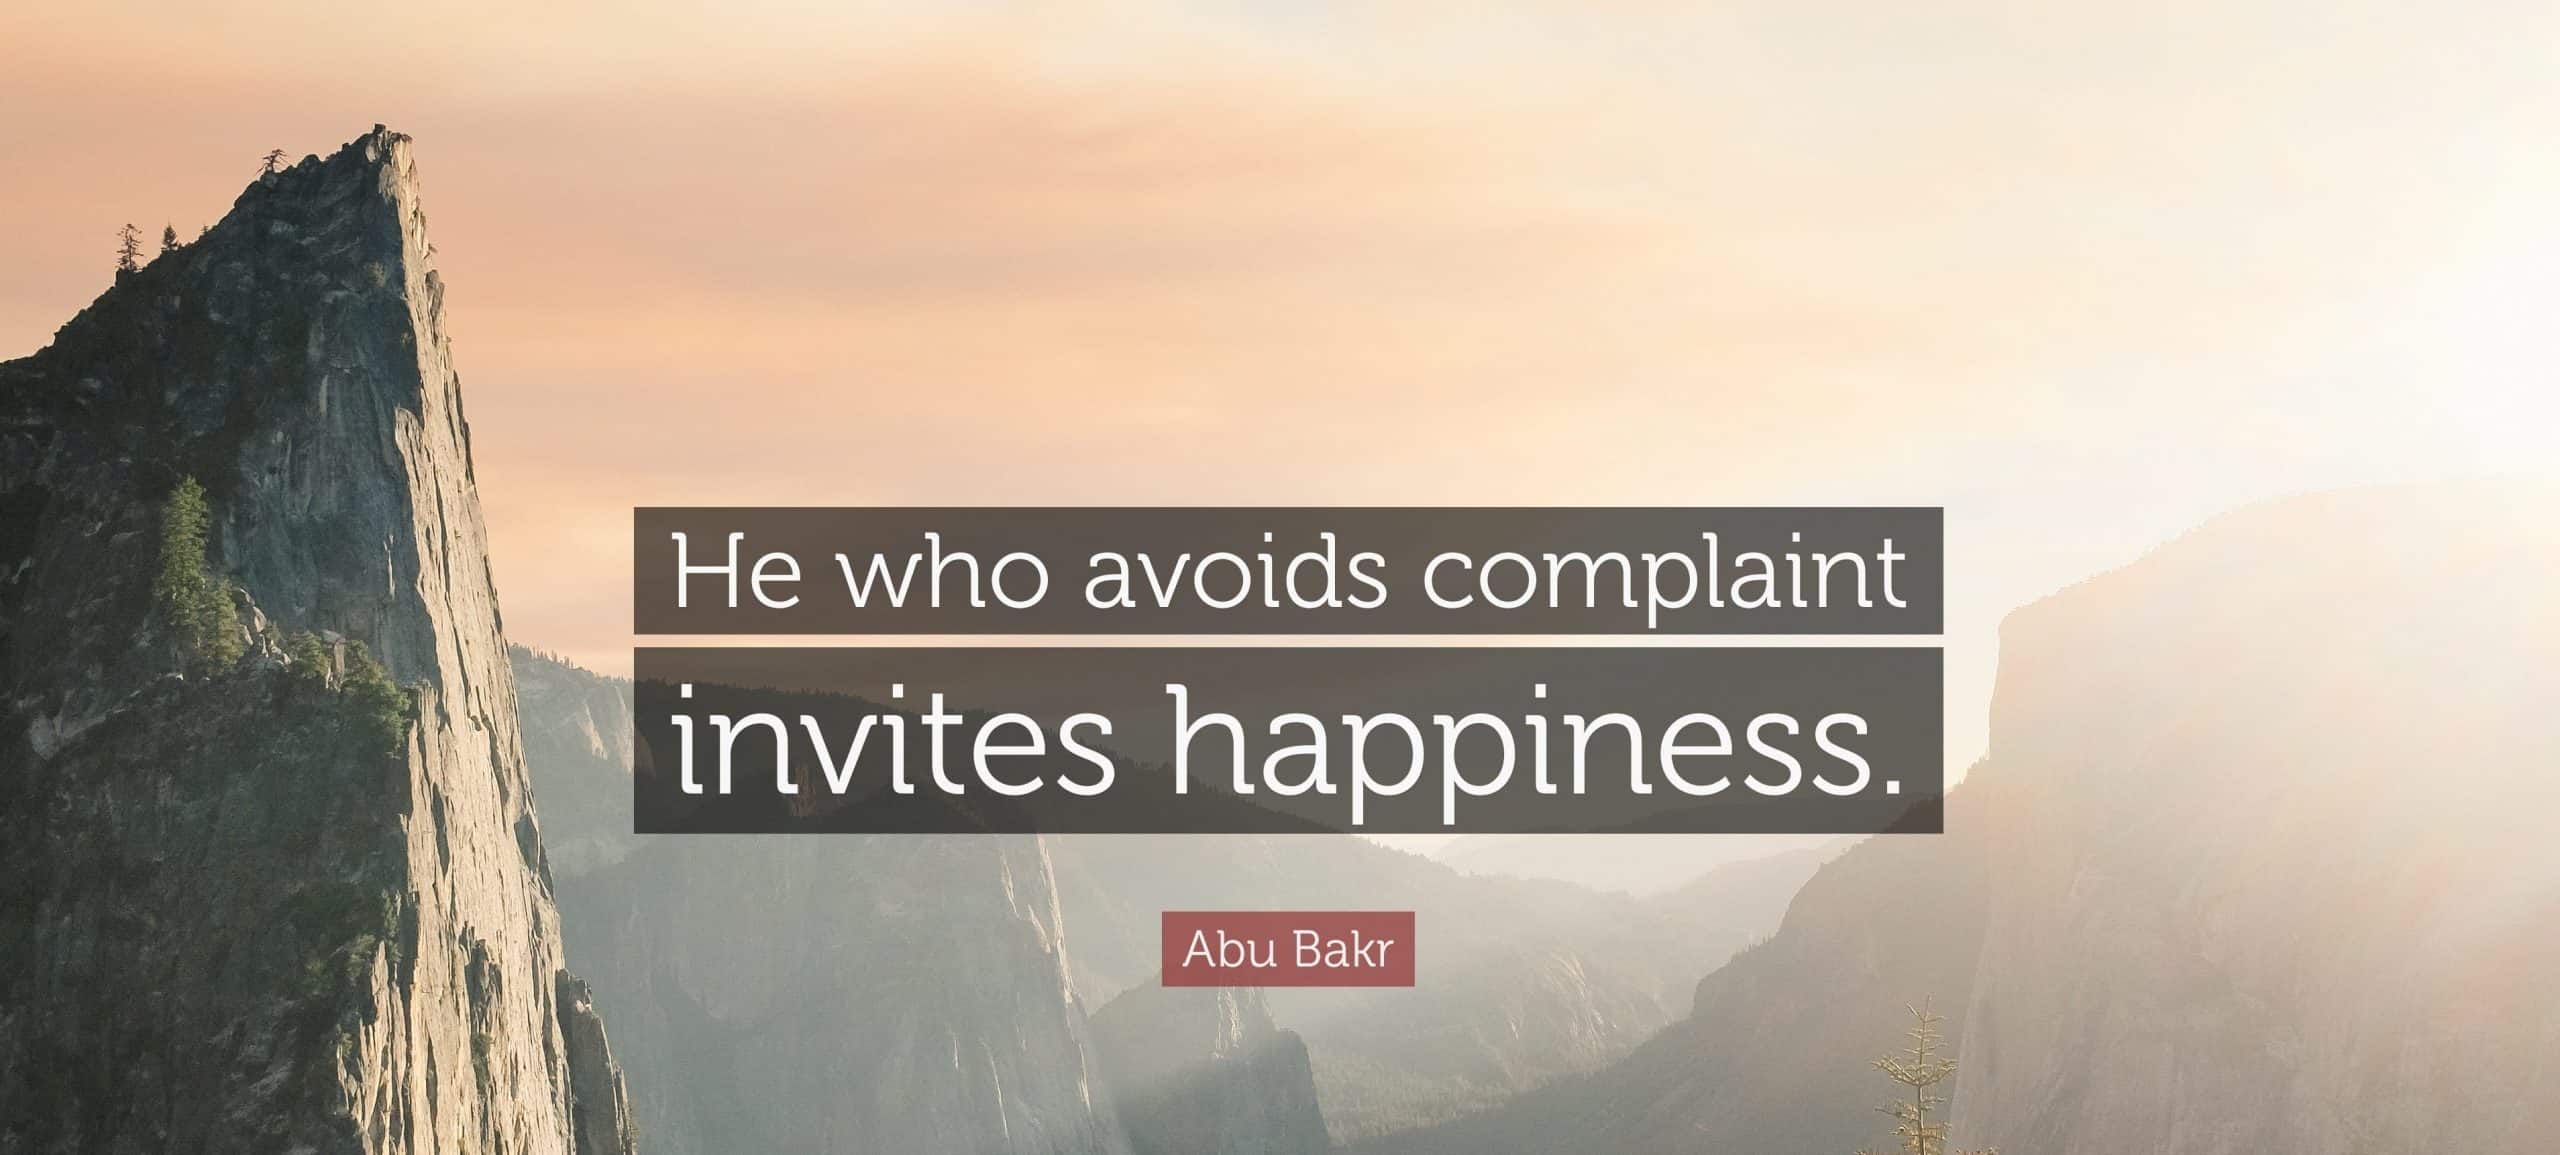 40 Best Hazrat Abu Bakar Saddique R.A Quotes and Sayings